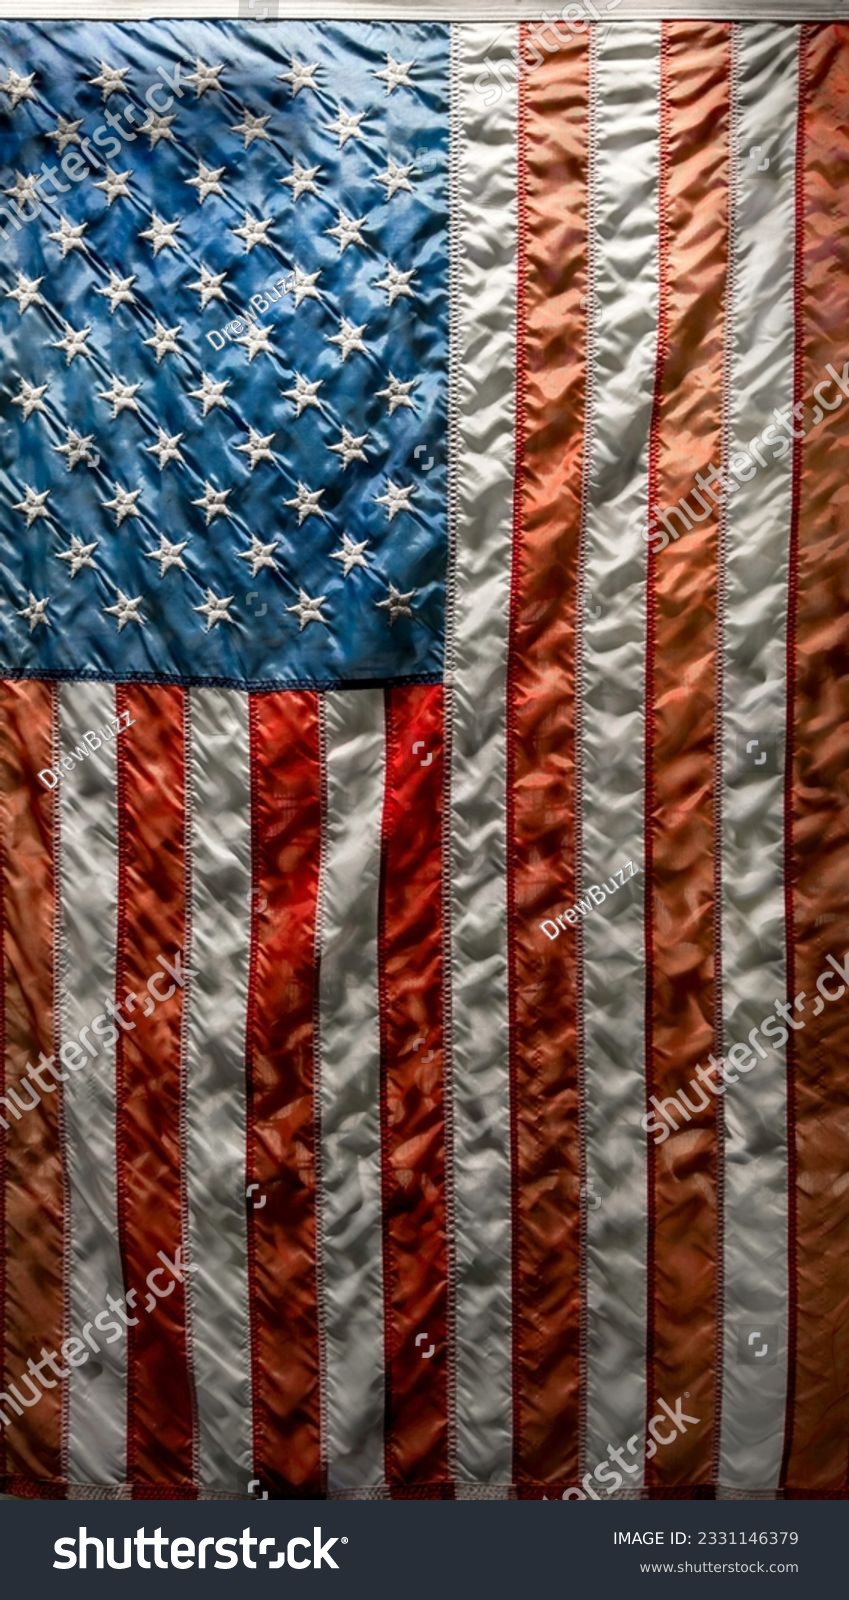 a vintage silk antique american flag old glory patriot freedom democracy pledge of allegiance national anthem #2331146379